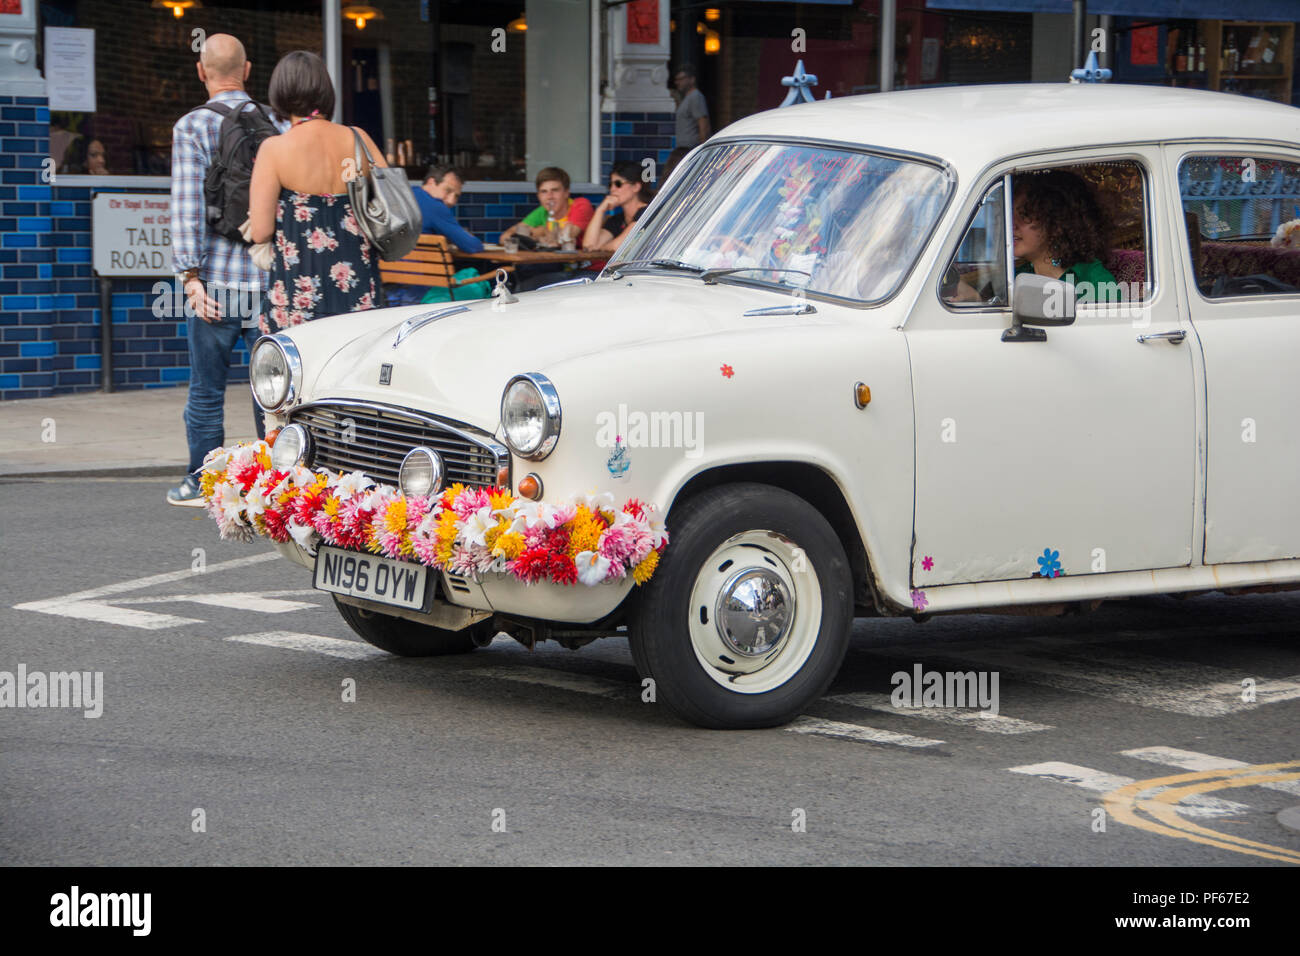 Vintage car adorned with plastic flowers in Portobello Road, London, UK Stock Photo